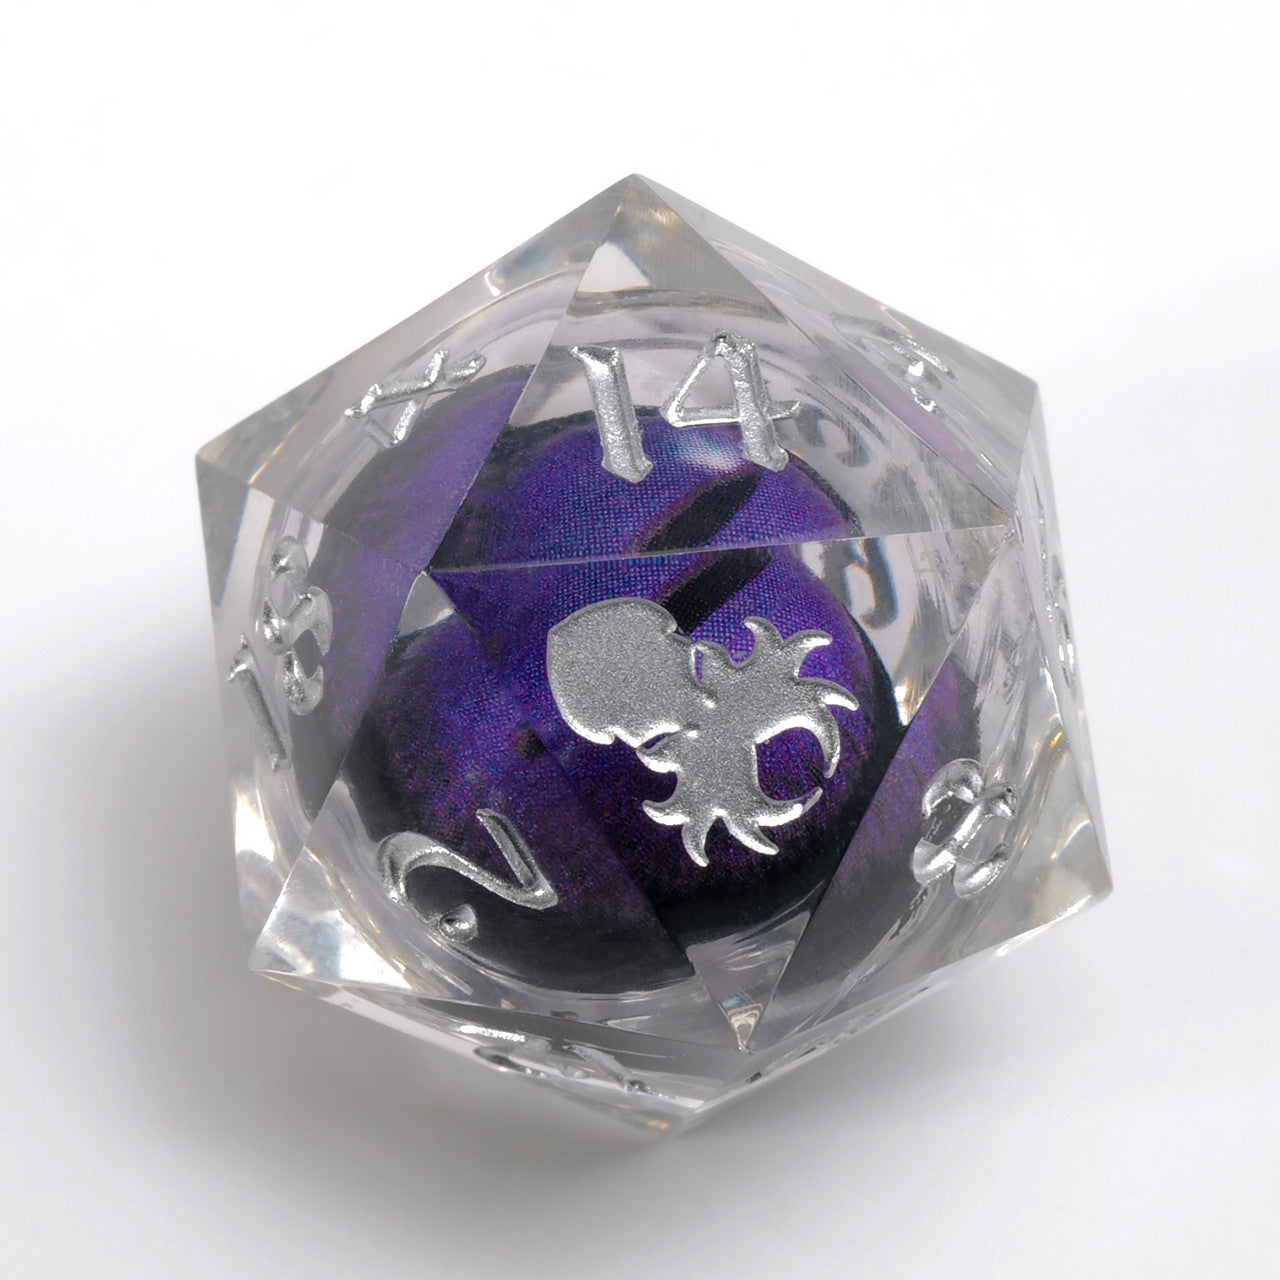 Dragon's eye D20 necklace-Gunmetal w/Purple gems